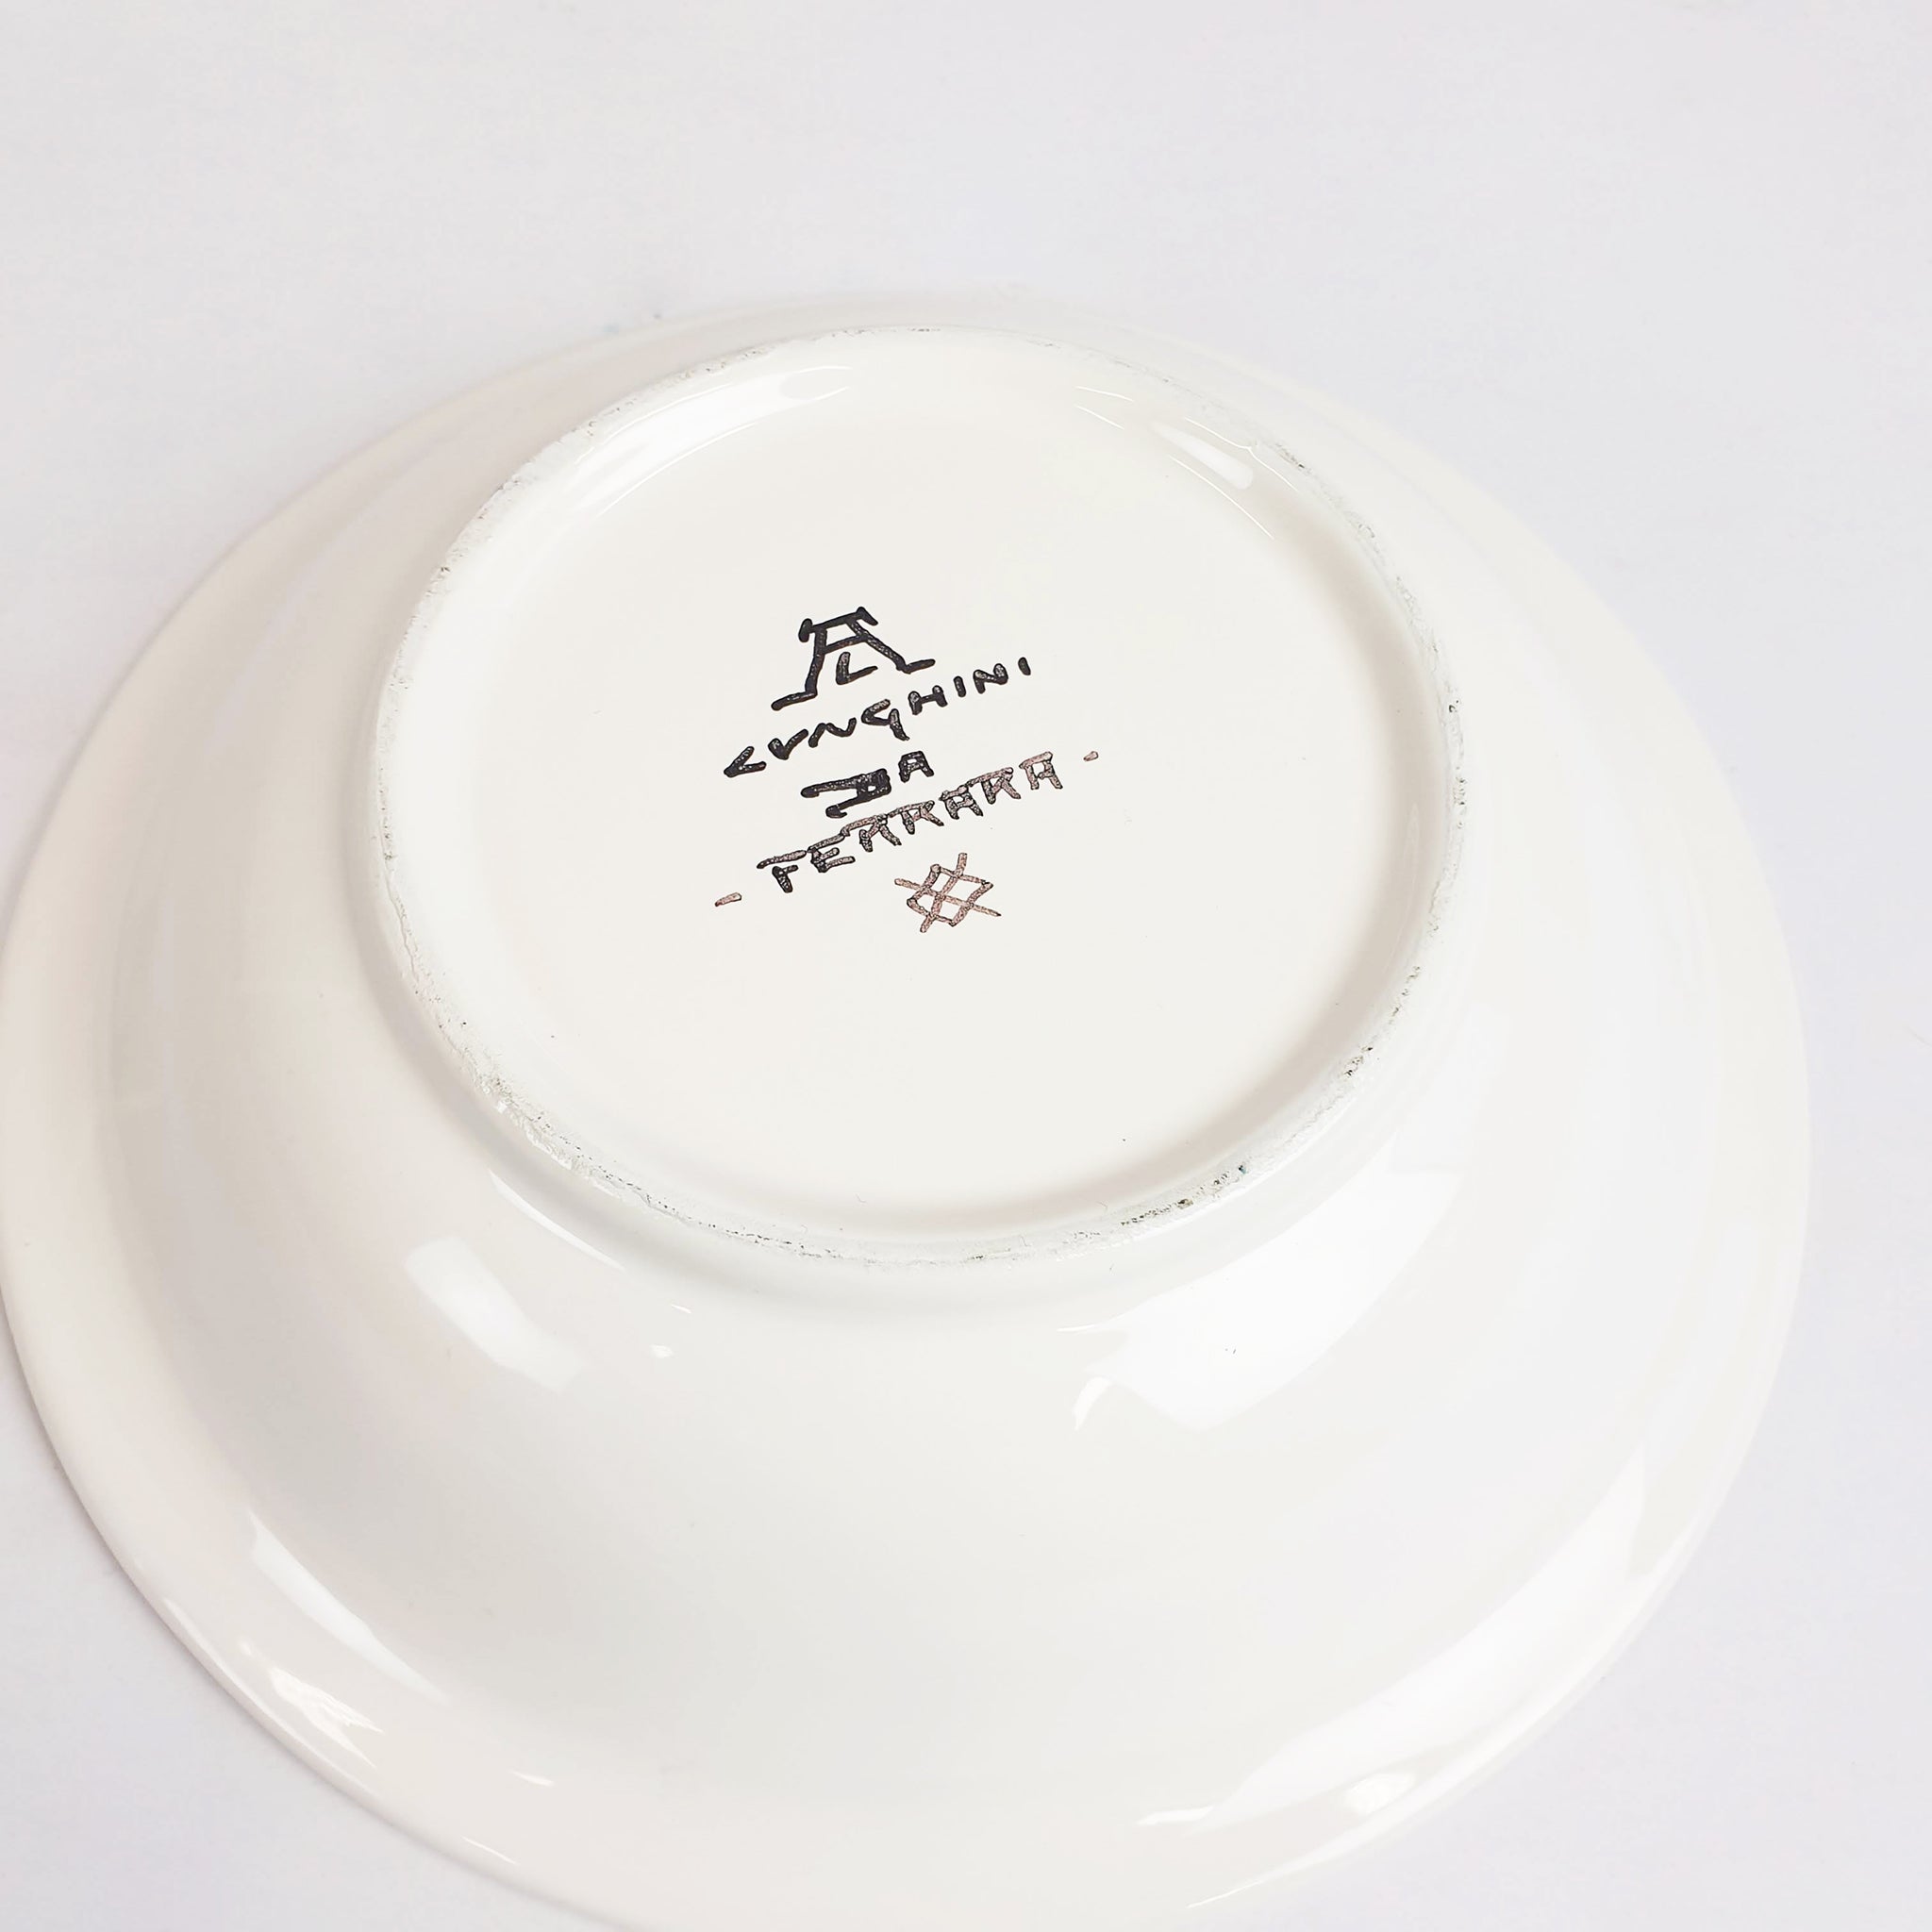 Vintage ceramic bowl by Lunghini da Ferrara